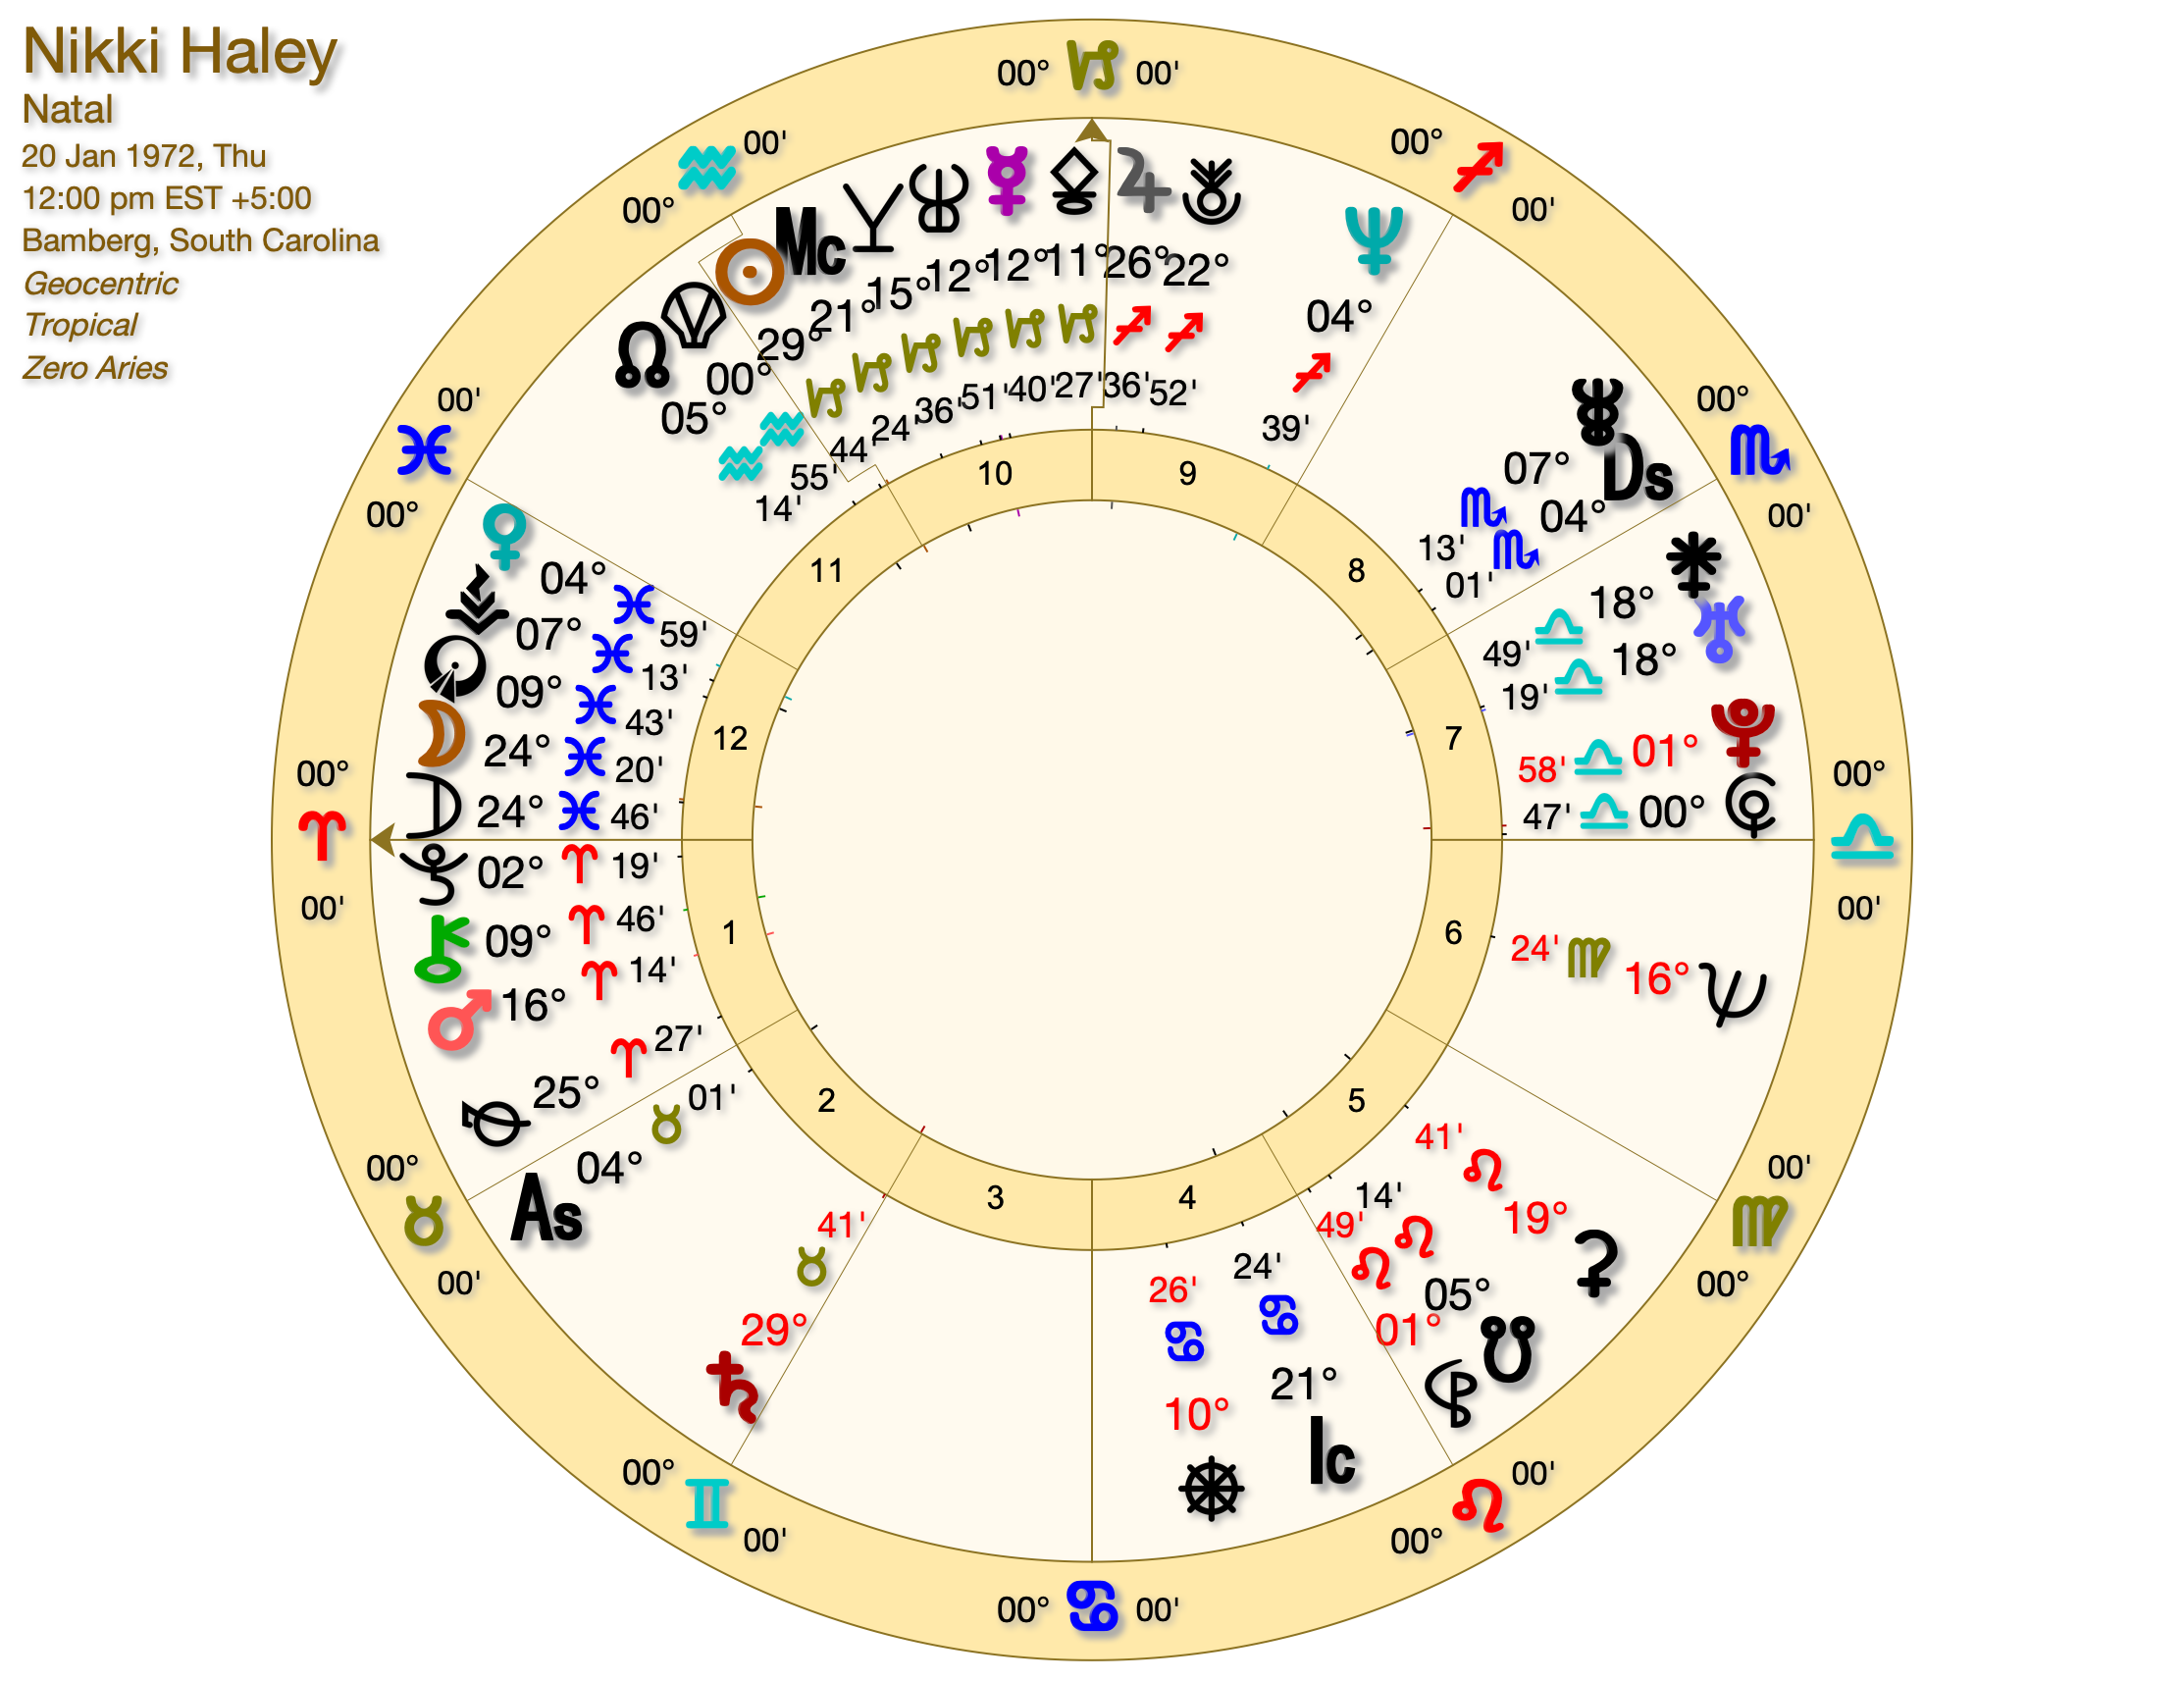 NIKKI HALEY NATAL CHART - The Astrology of Nikki Haley